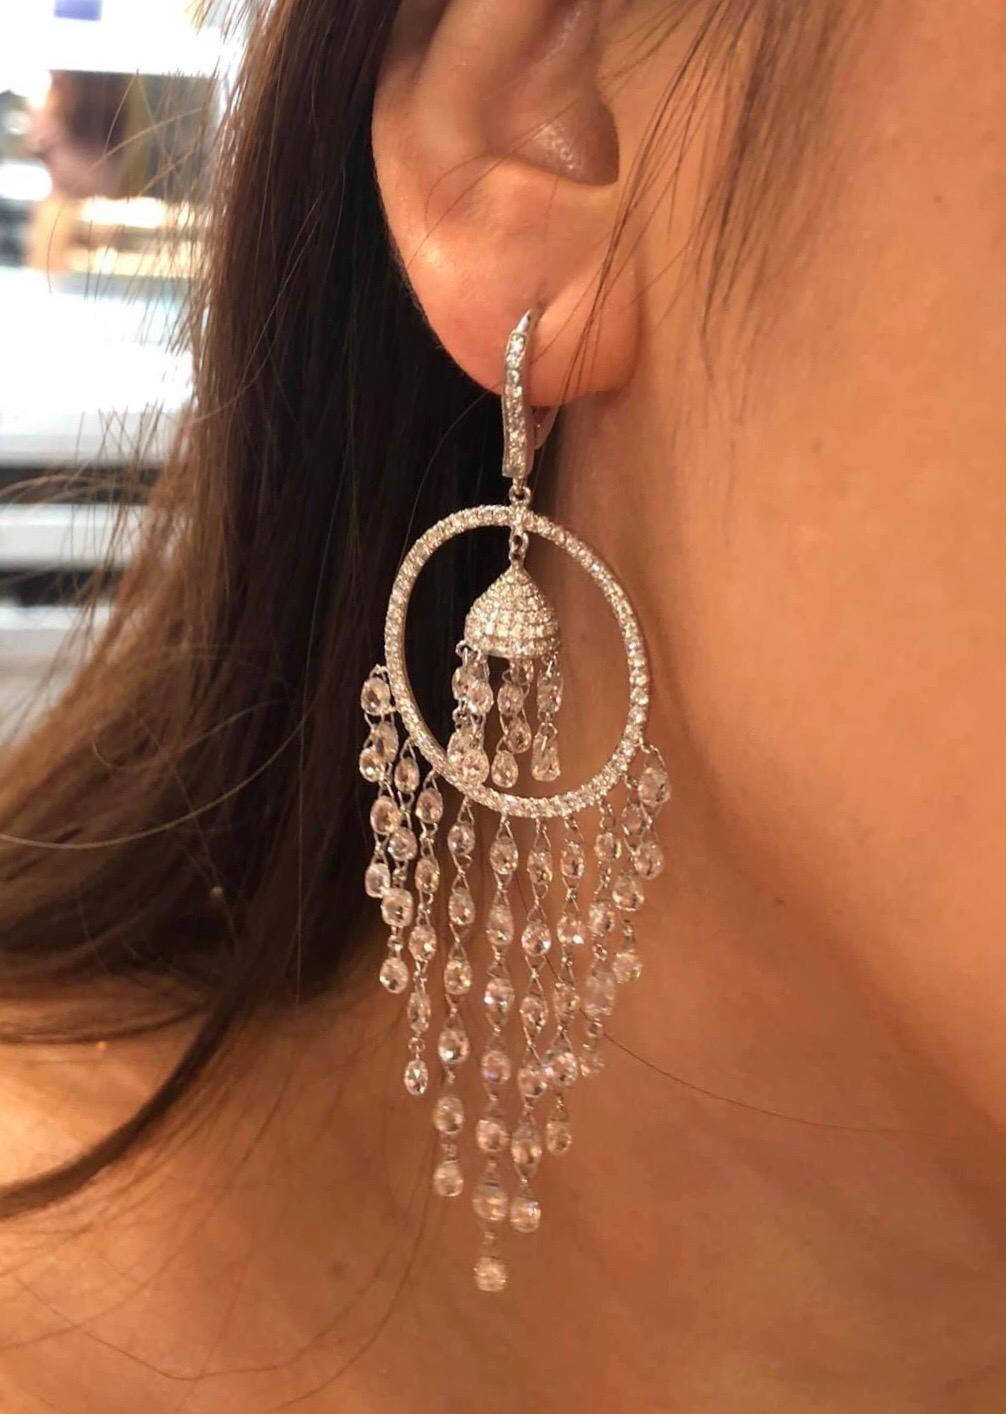 PANIM 19.81 Carat Diamond Briolette 18k White Gold Drop Earrings

A pair of drop diamond earrings, designed as a round brilliant-cut diamond set open circle with briolette-cut diamond tassels, with a total diamond weight of 19.81ct, mounted in